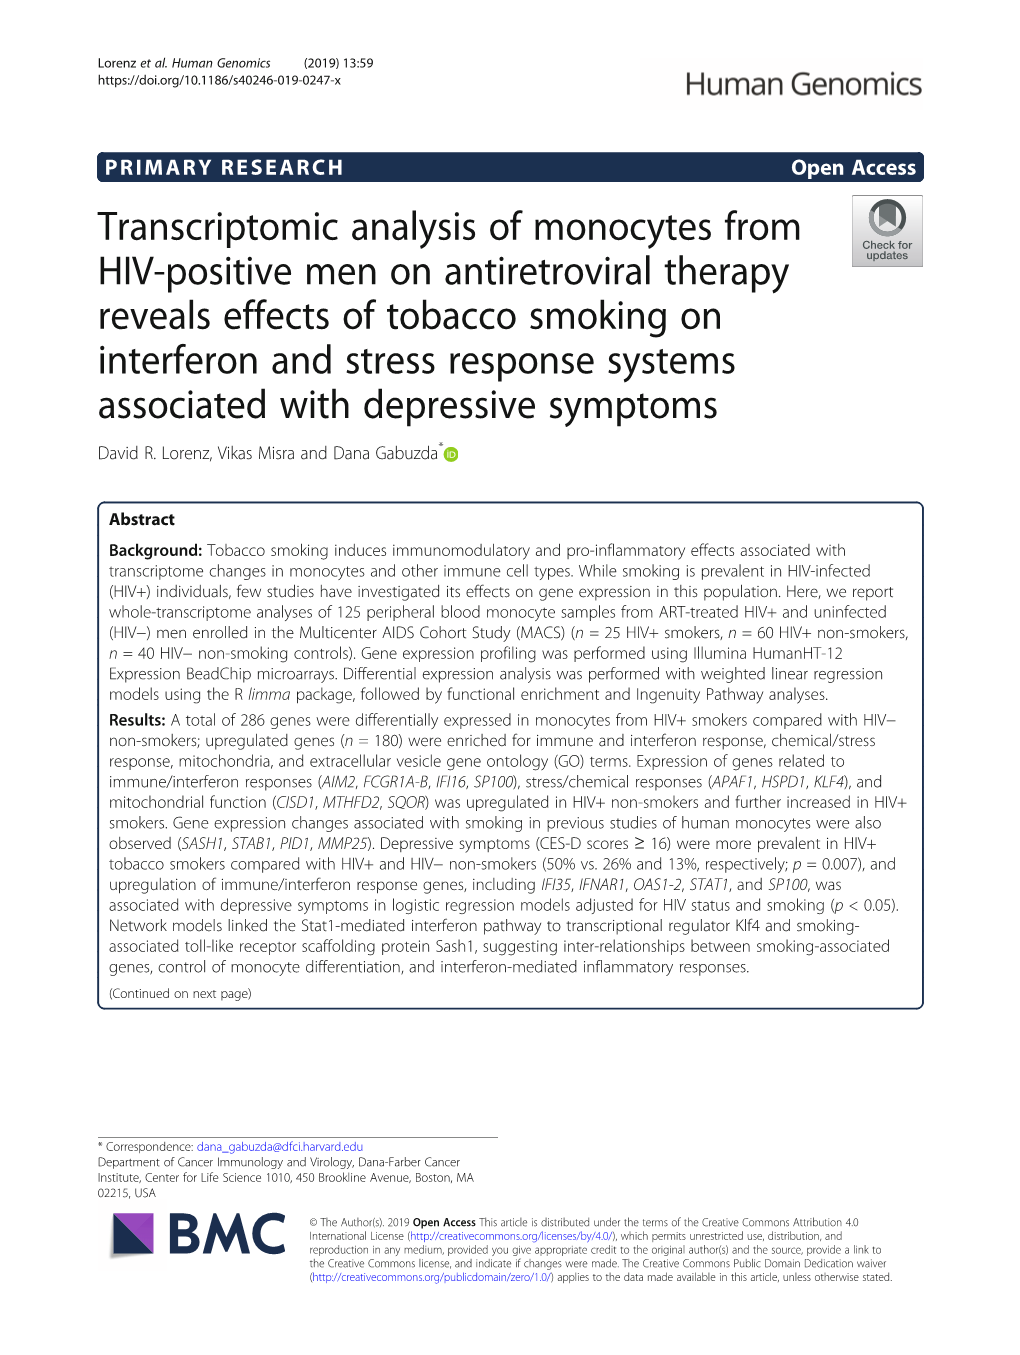 Transcriptomic Analysis of Monocytes from HIV-Positive Men On